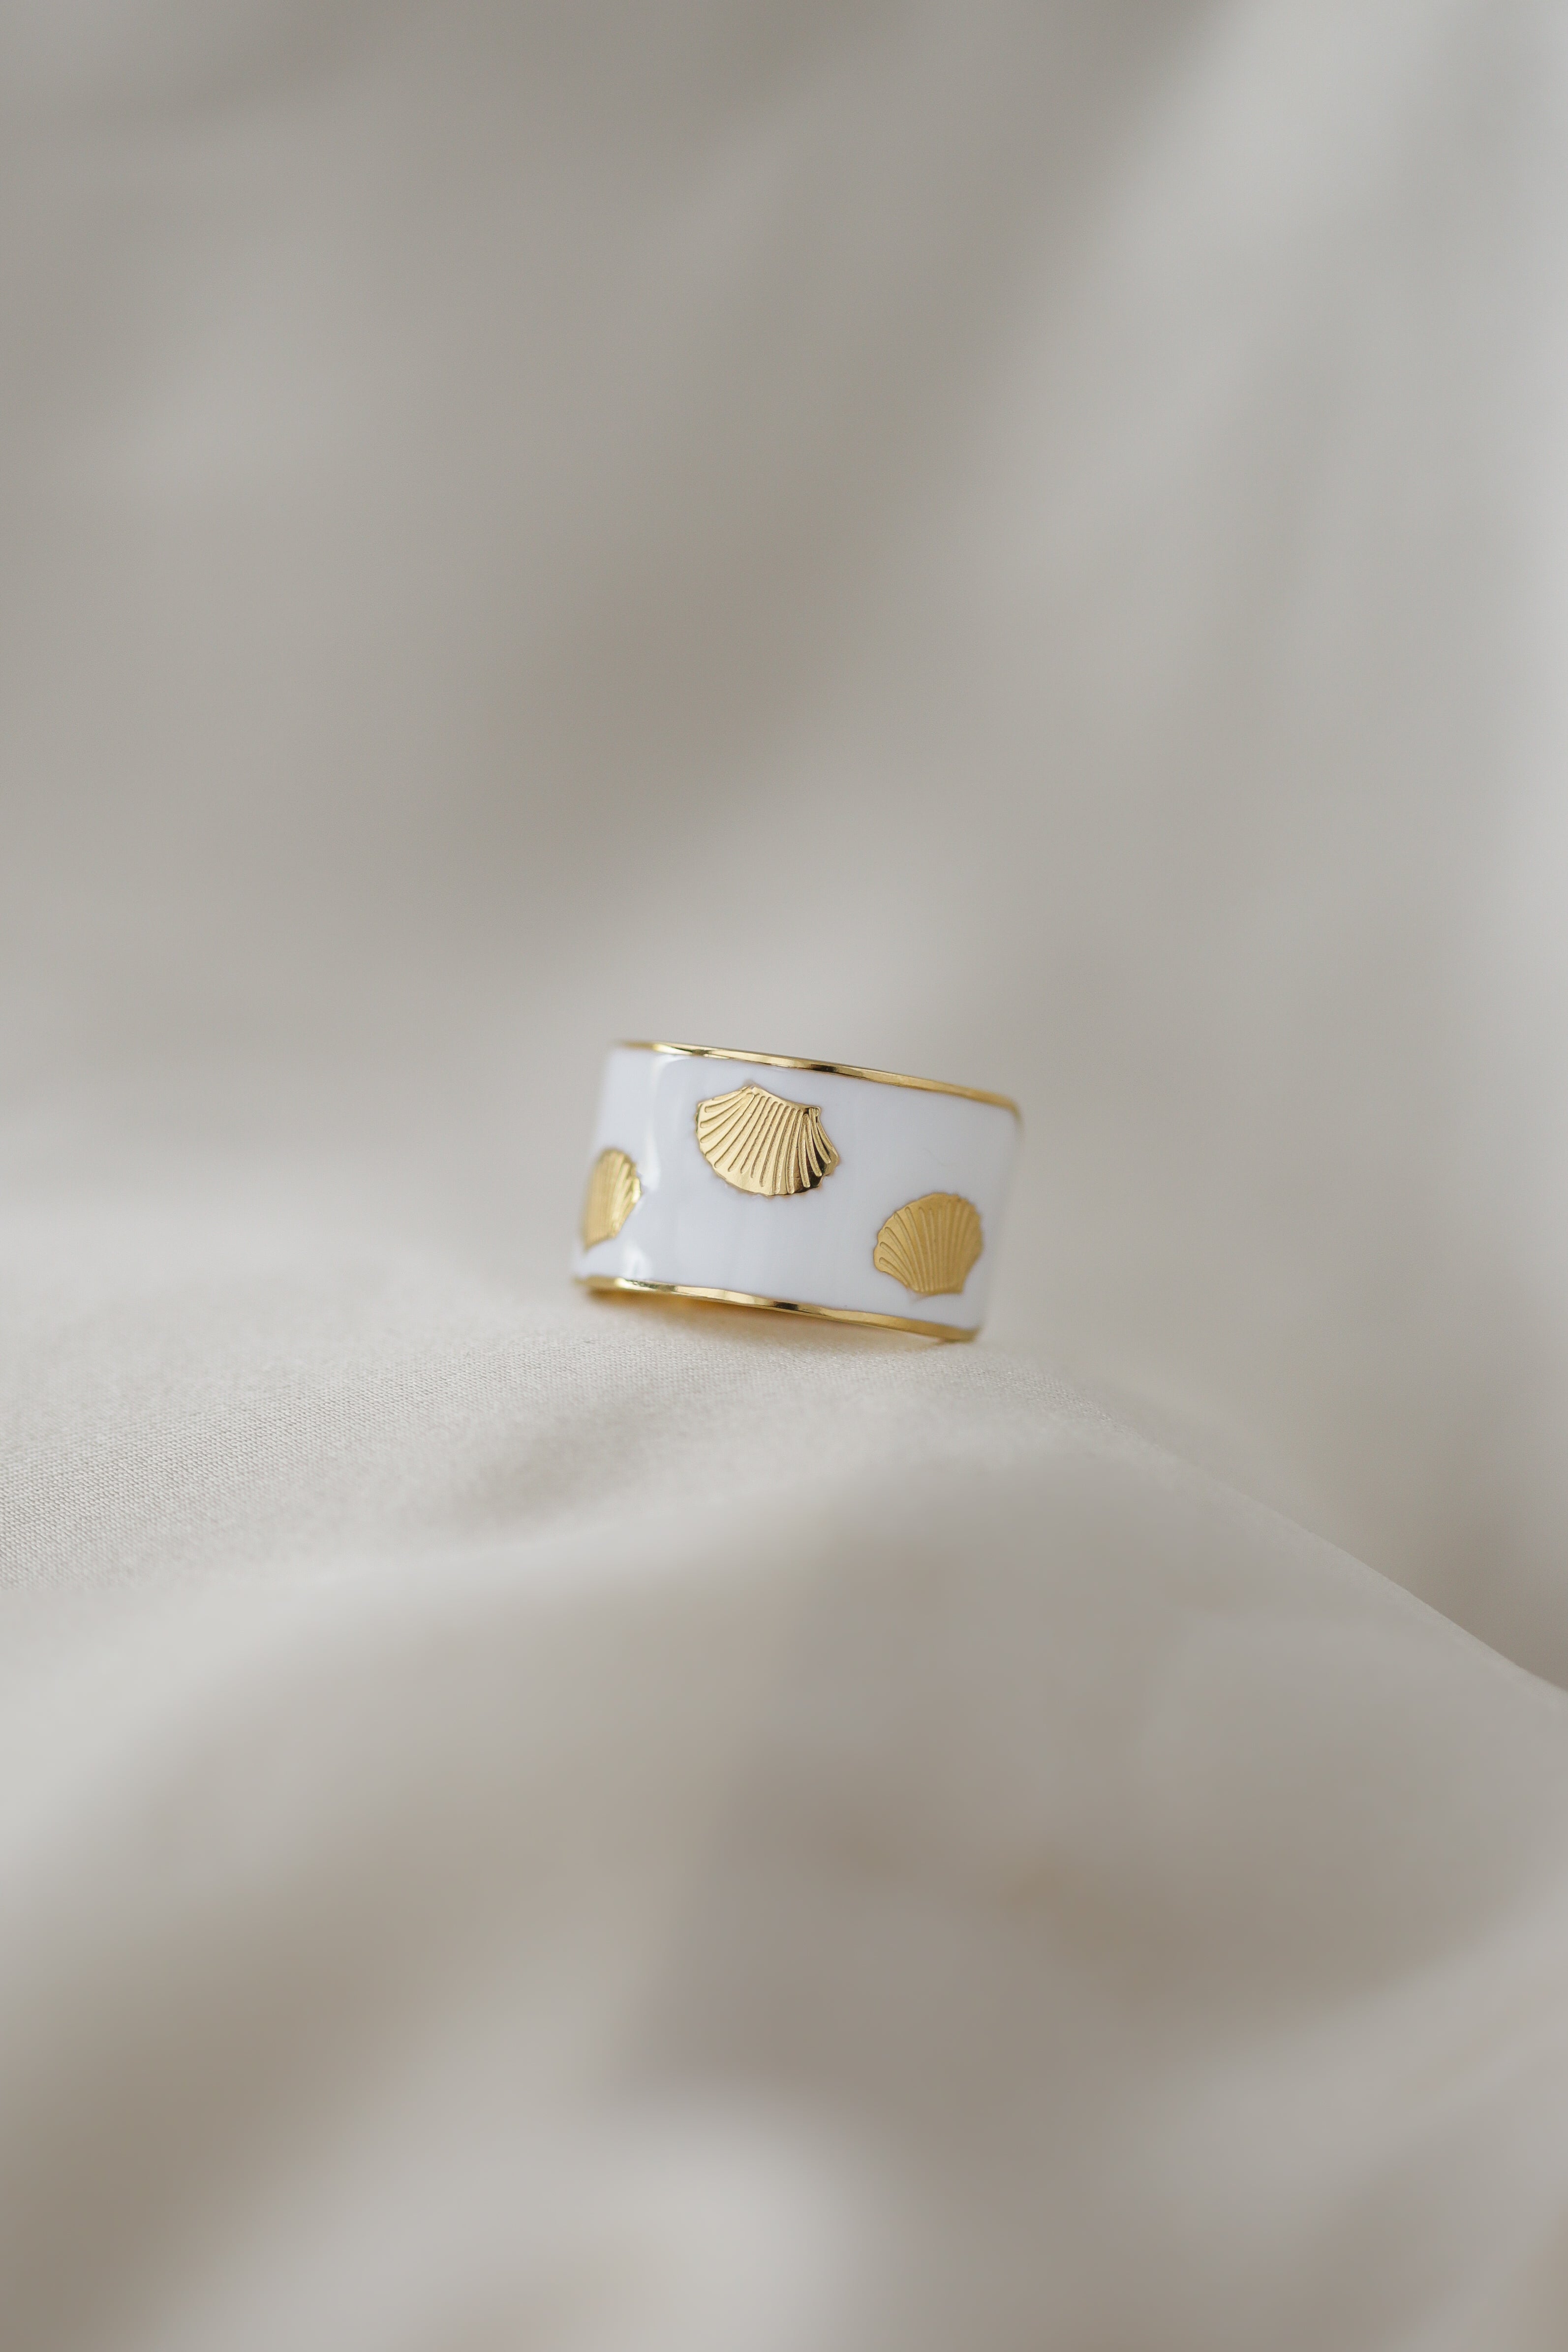 Xara Ring - Boutique Minimaliste has waterproof, durable, elegant and vintage inspired jewelry